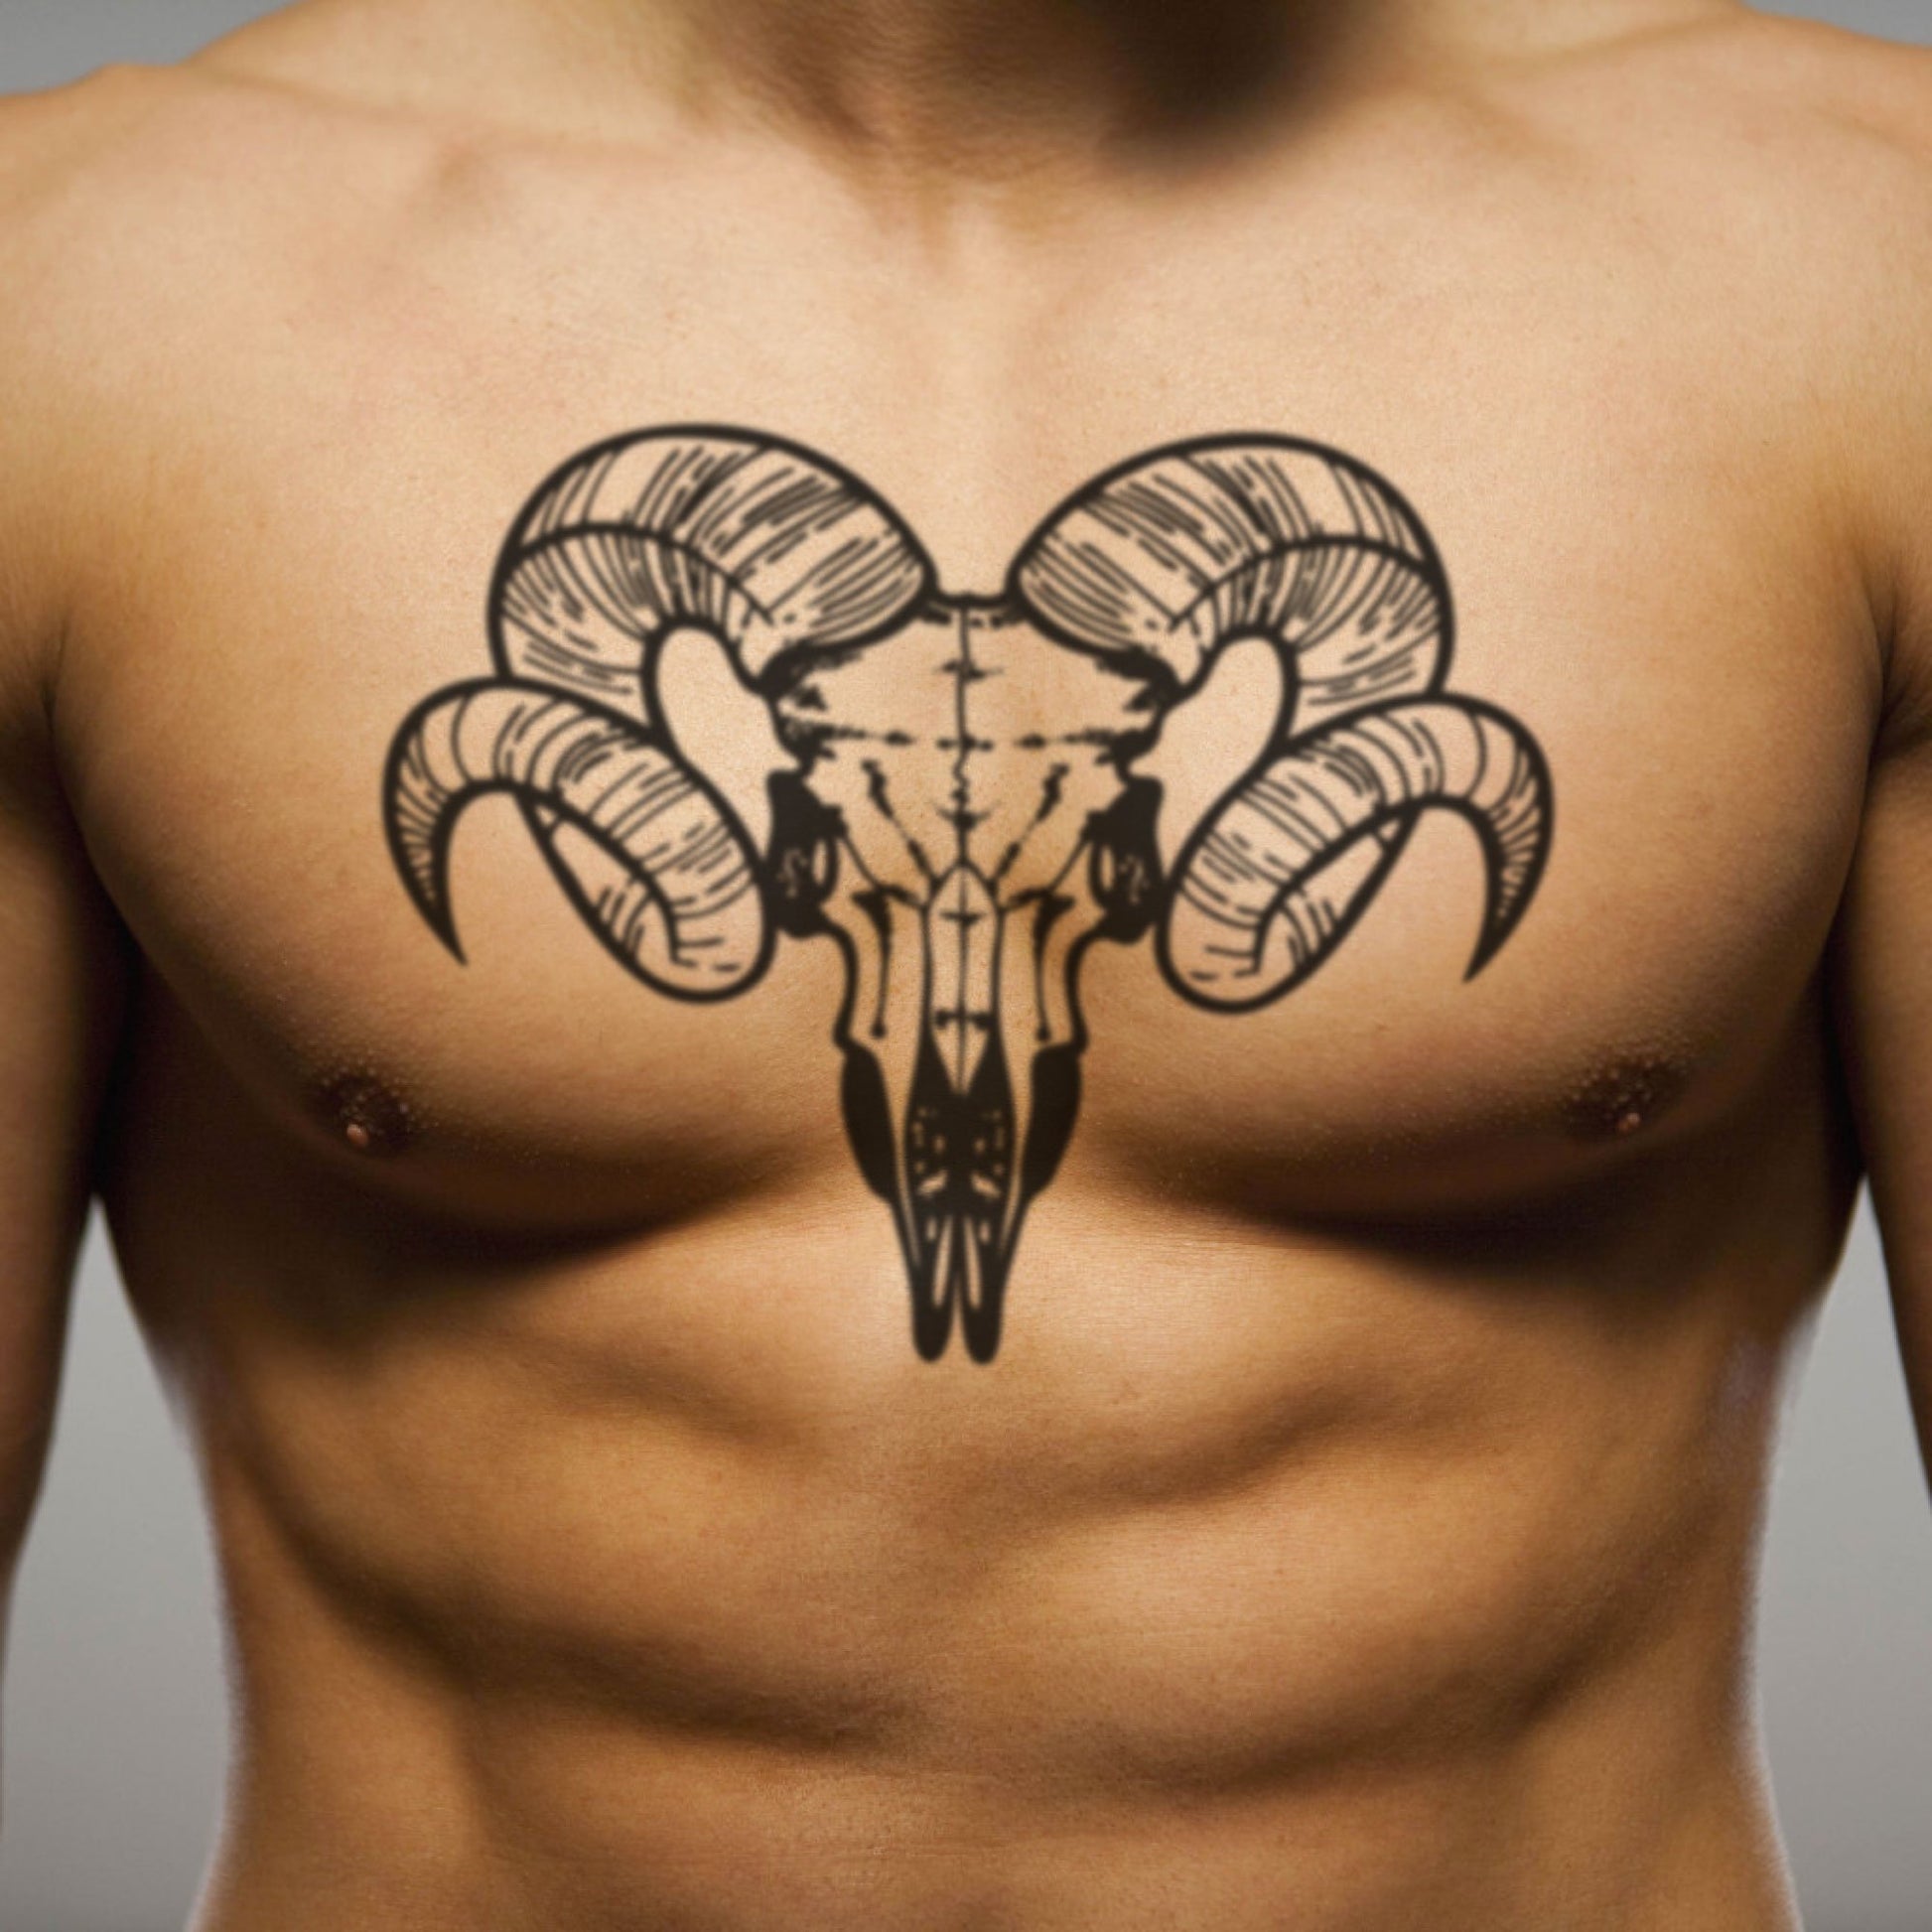 fake big bighorn sheep animal temporary tattoo sticker design idea on chest